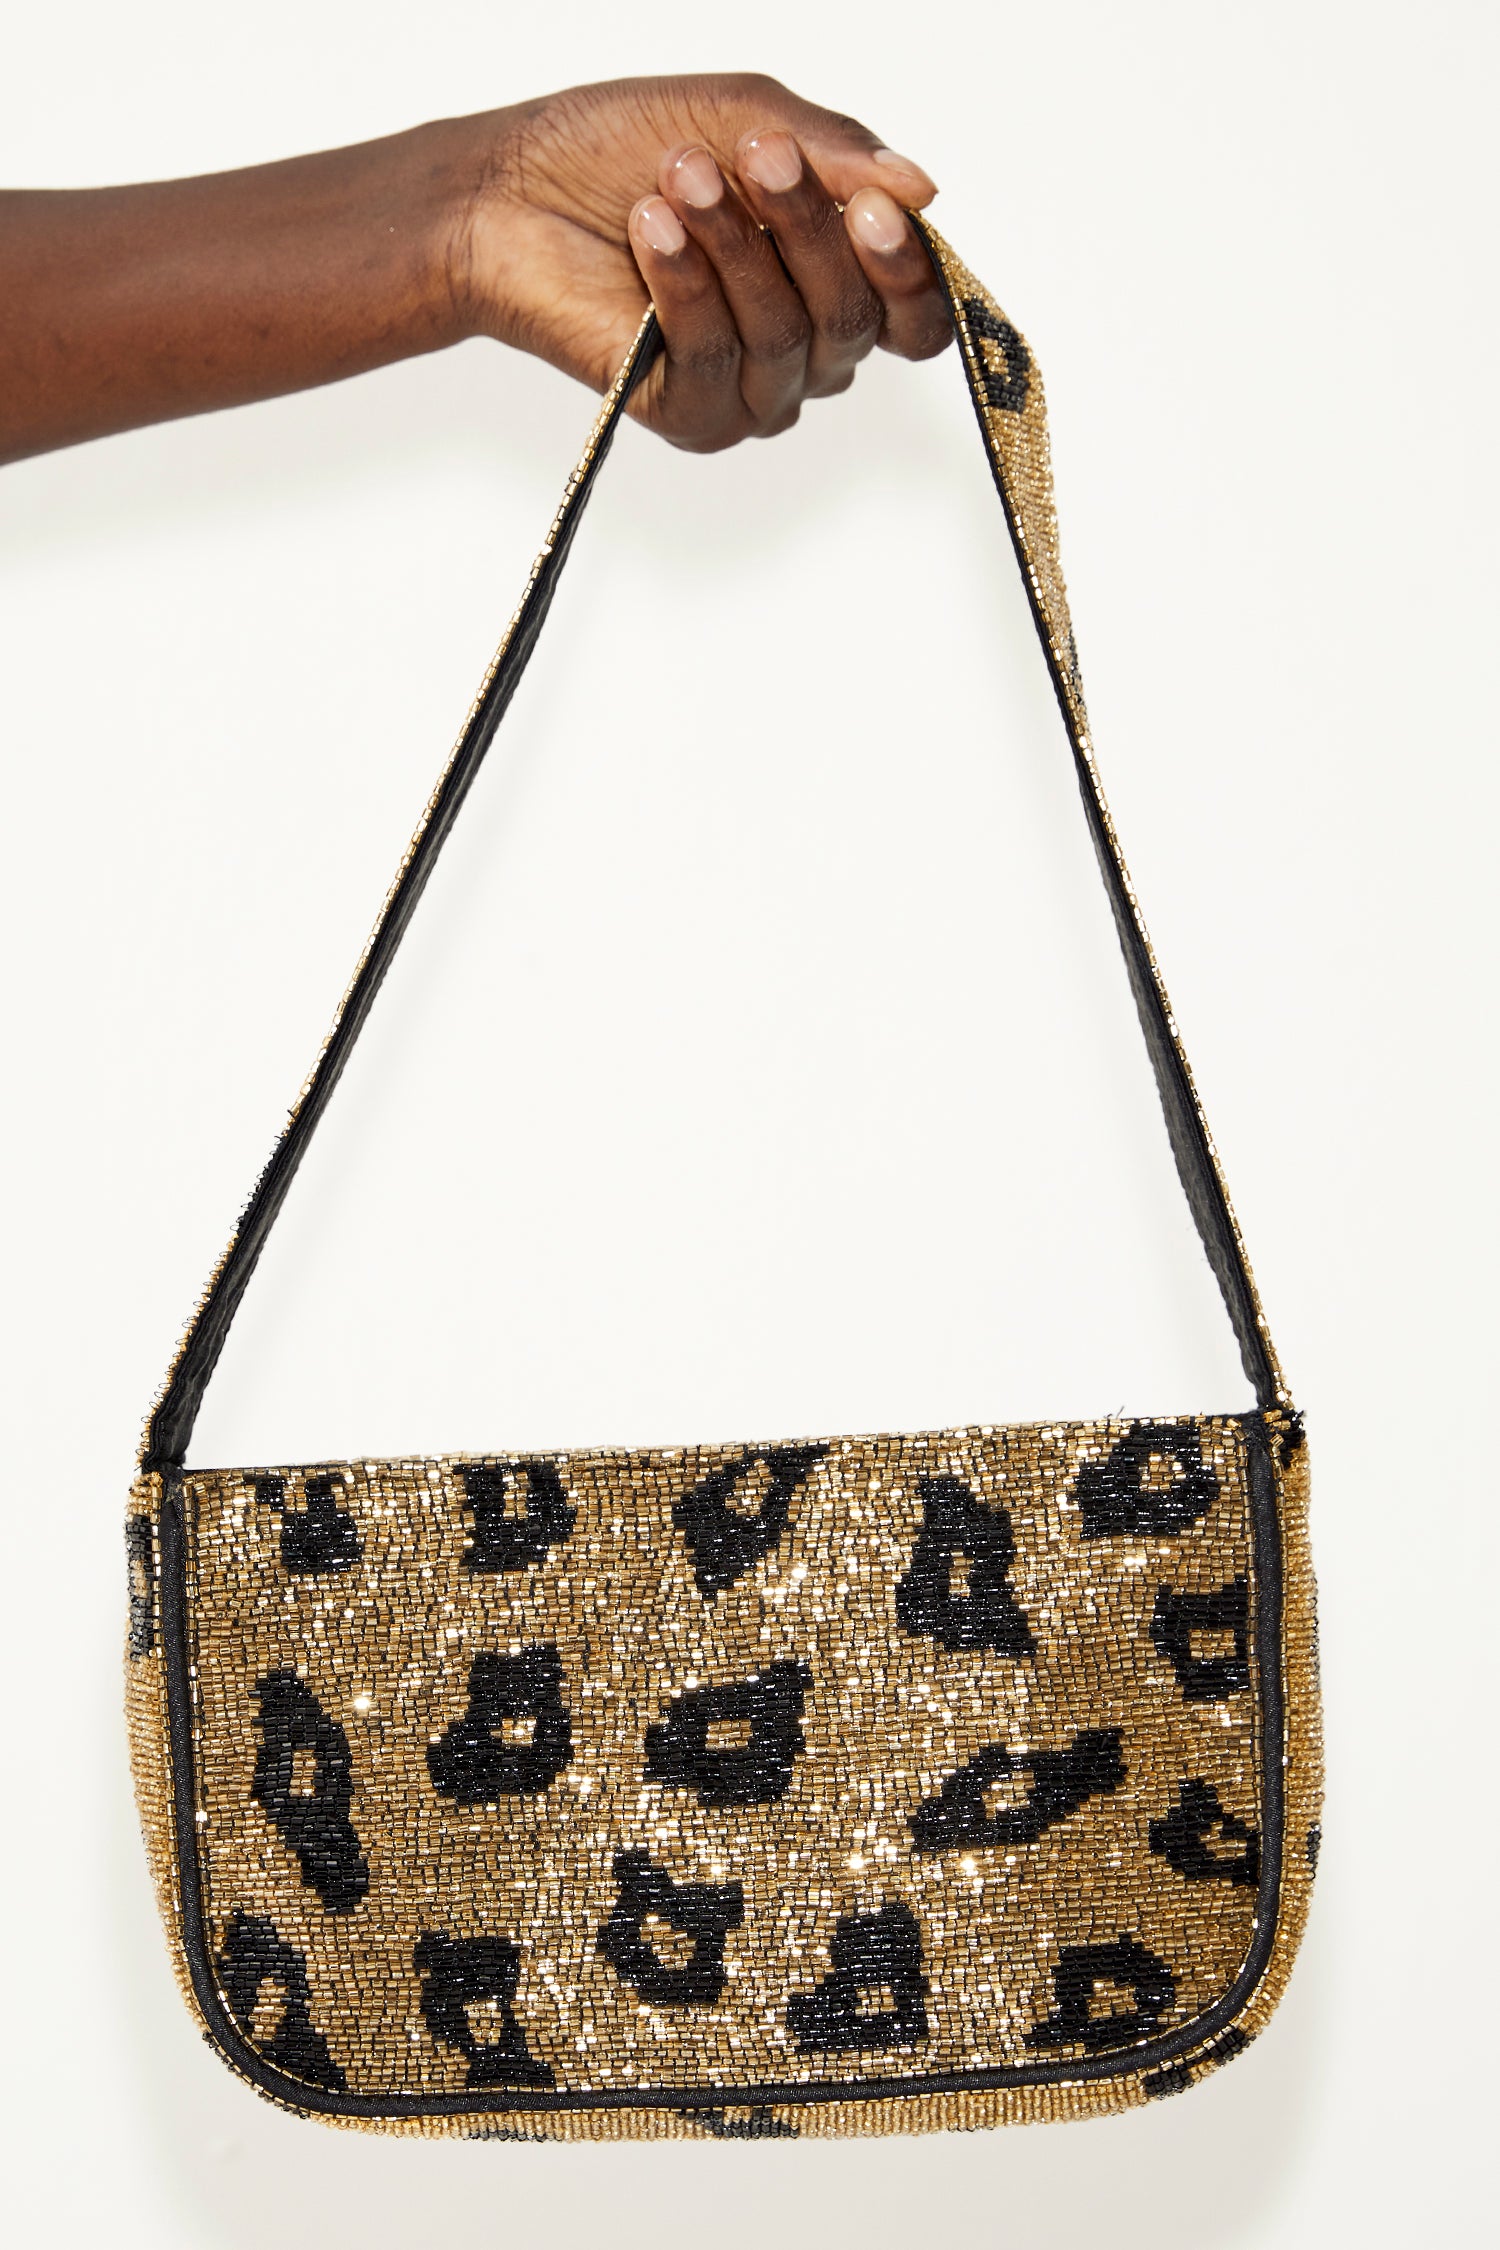 Brown Leopard Beaded Baguette Bag